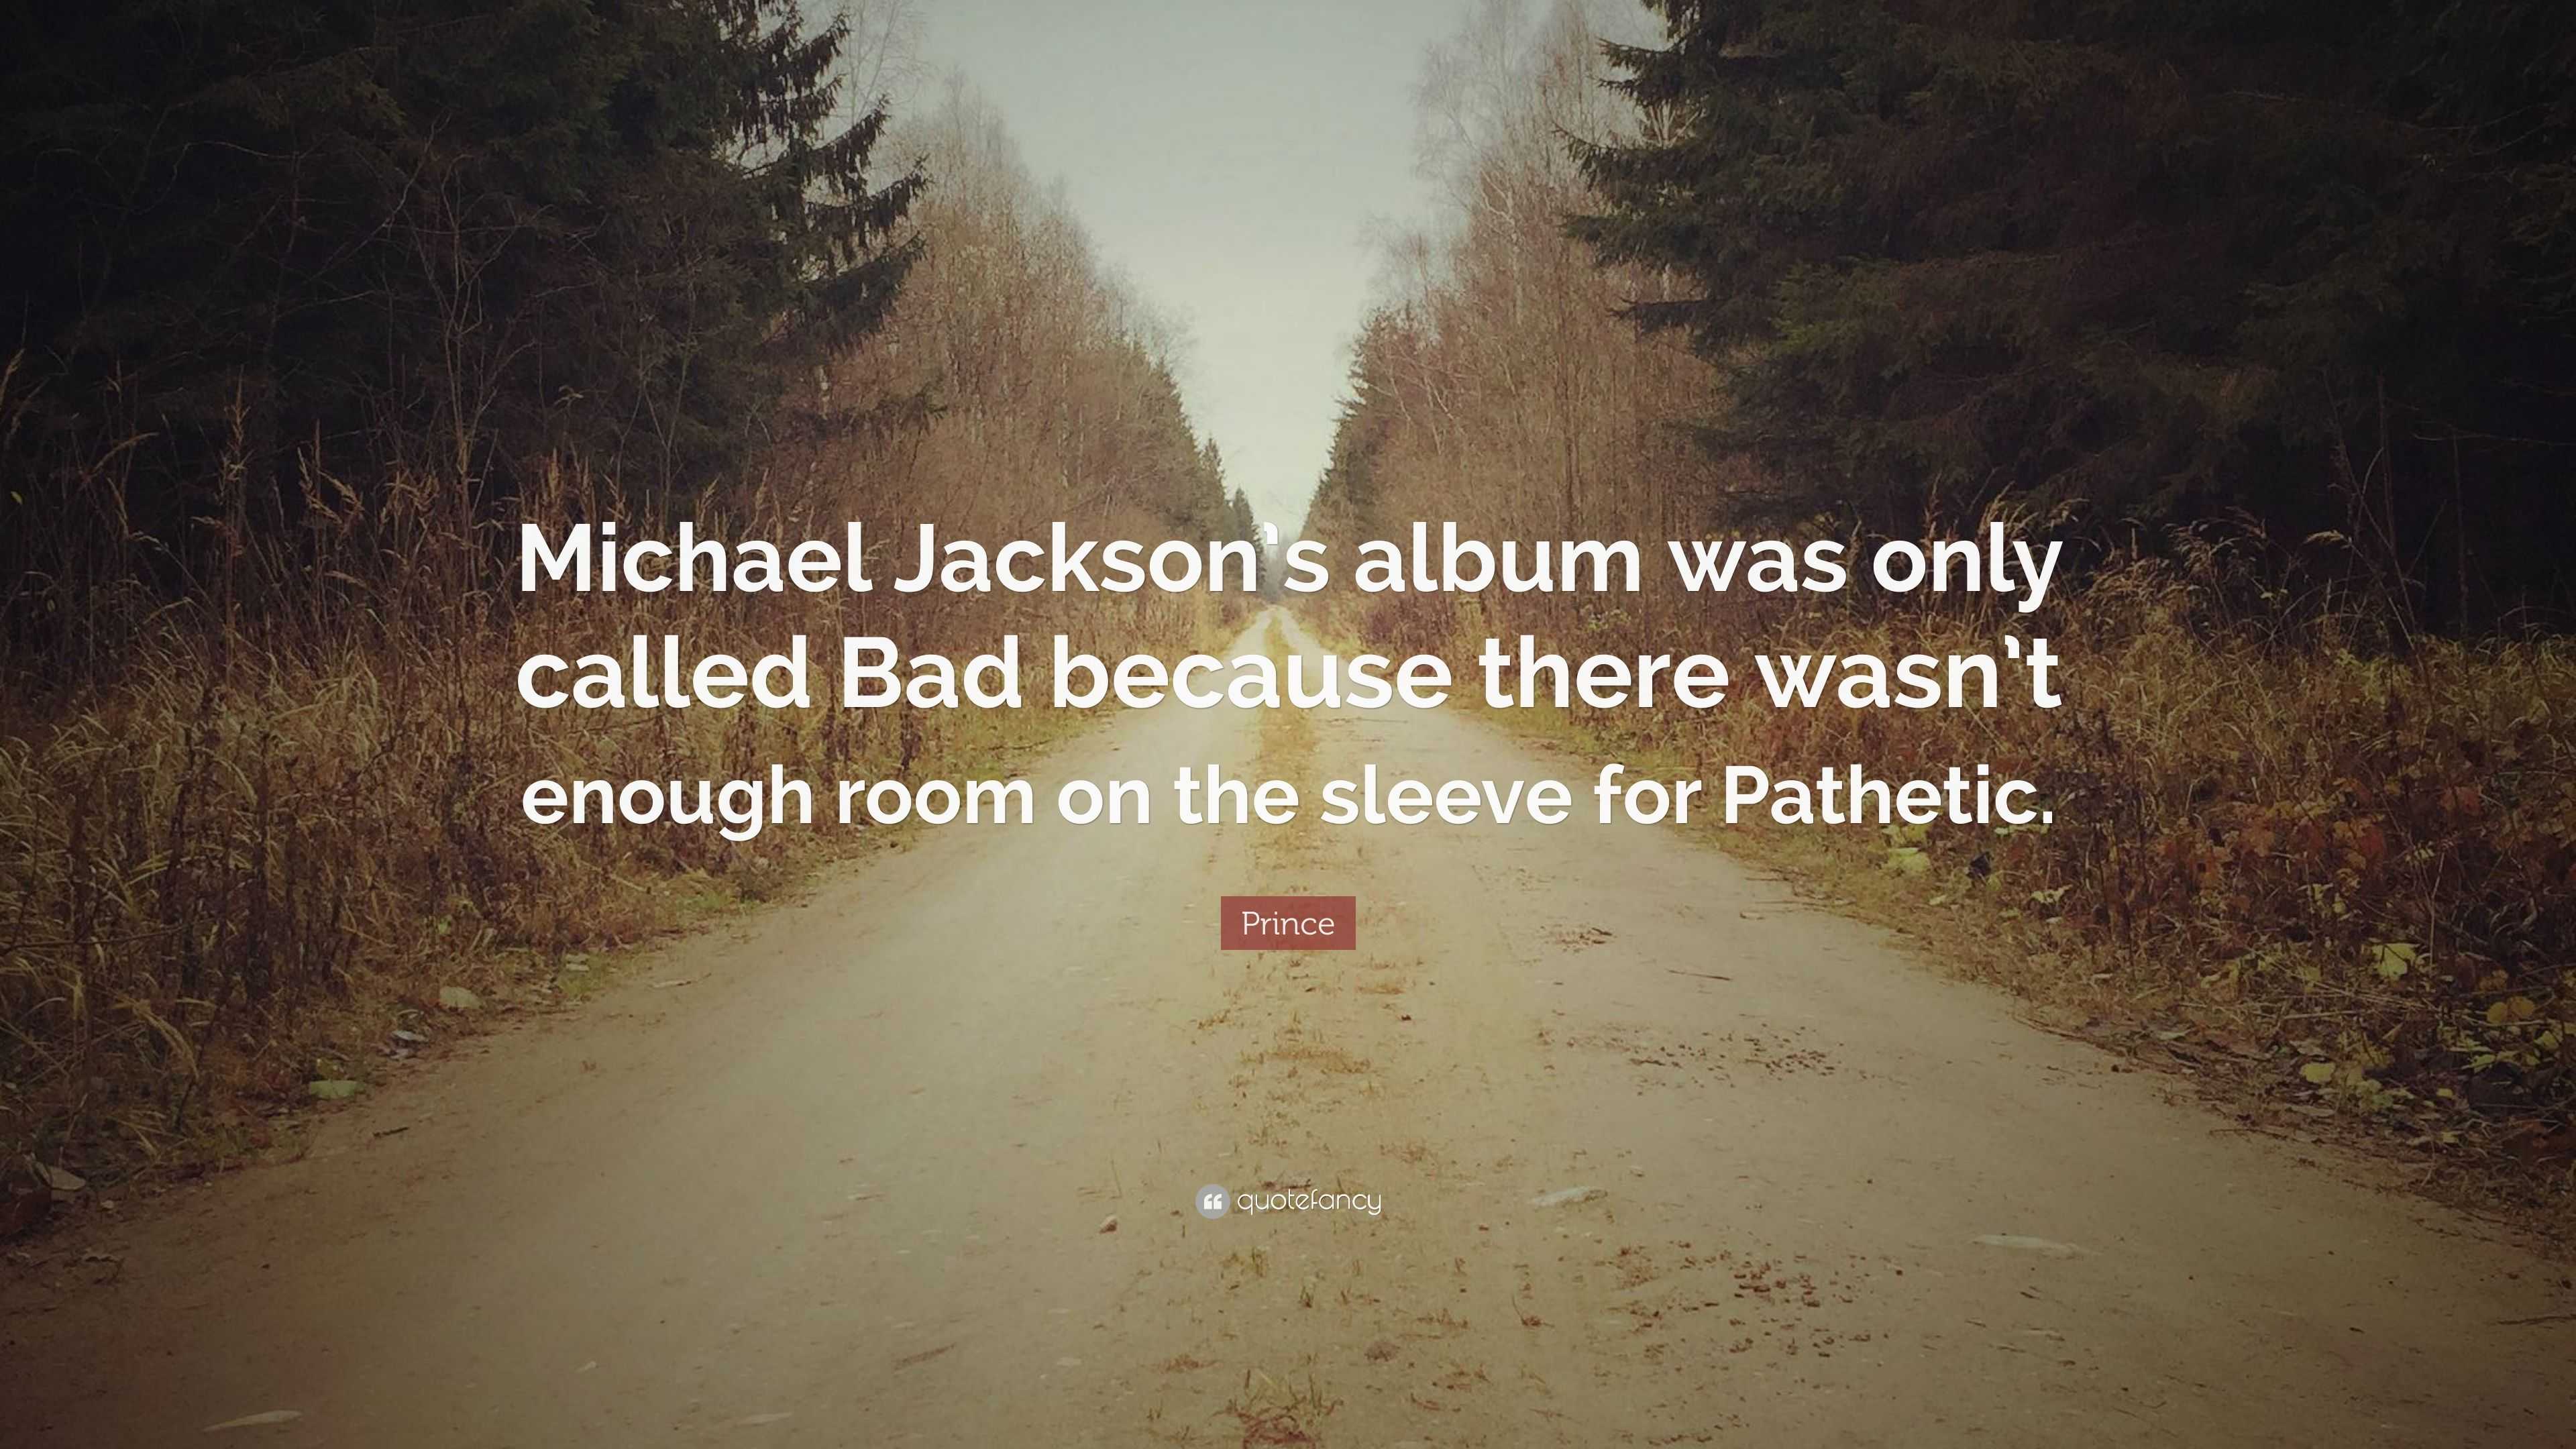 prince on michael jackson bad album